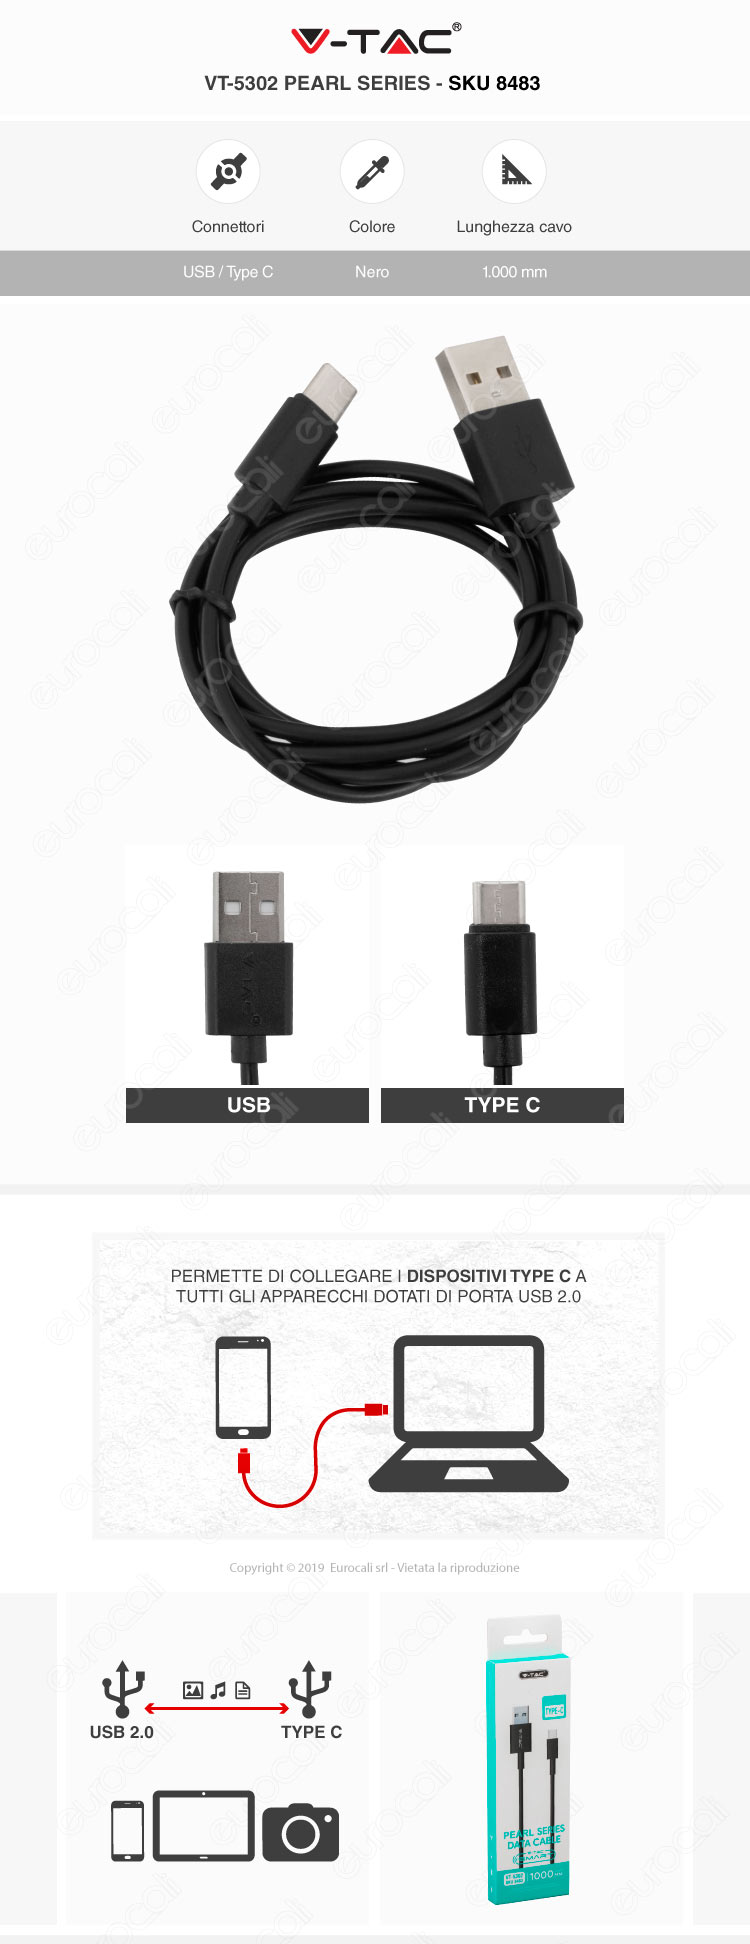 V-Tac VT-5302 Pearl series USB Data Cable Type-C Cavo Colore nERO 1m